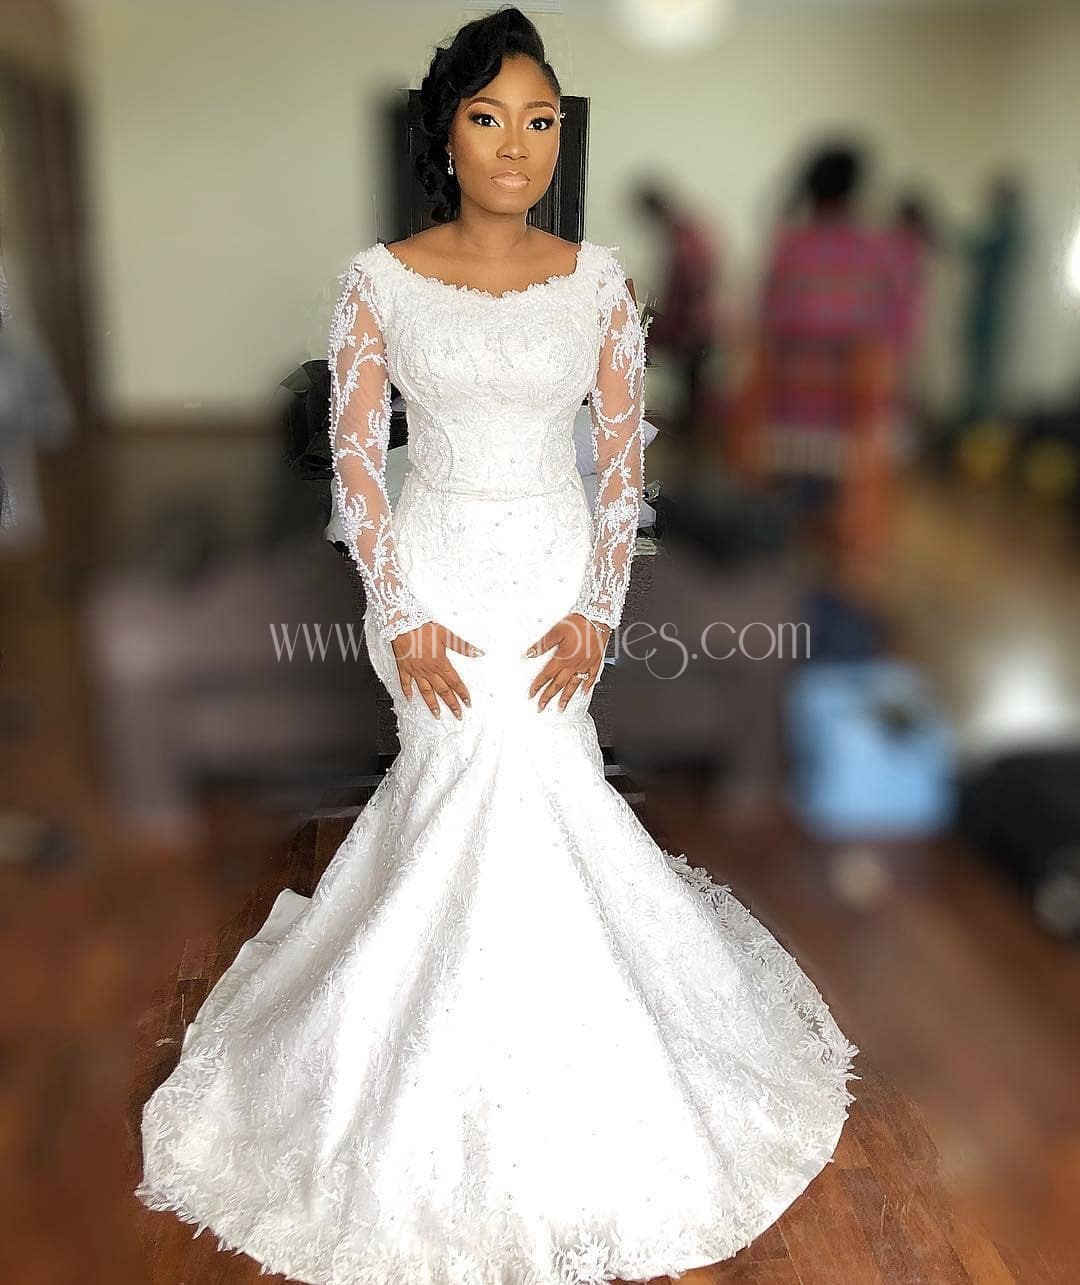 Best Wedding Gowns For 2018 Brides